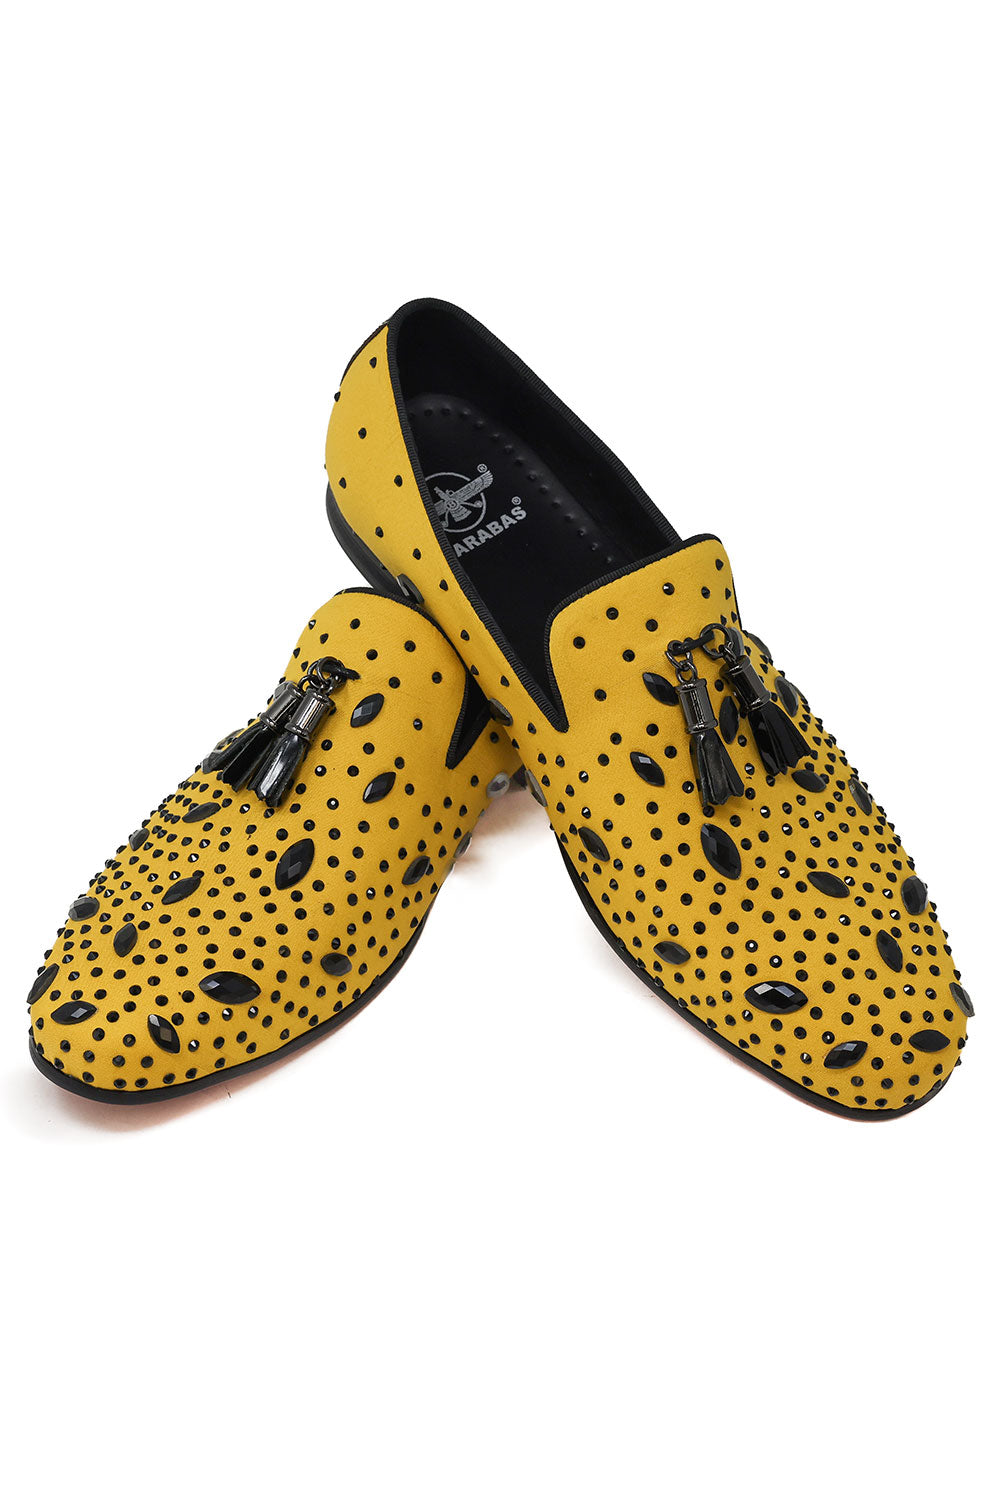 BARABAS Men's Rhinestone Dimond Tassel Loafer Dress Shoes SH3080 Mustard Black